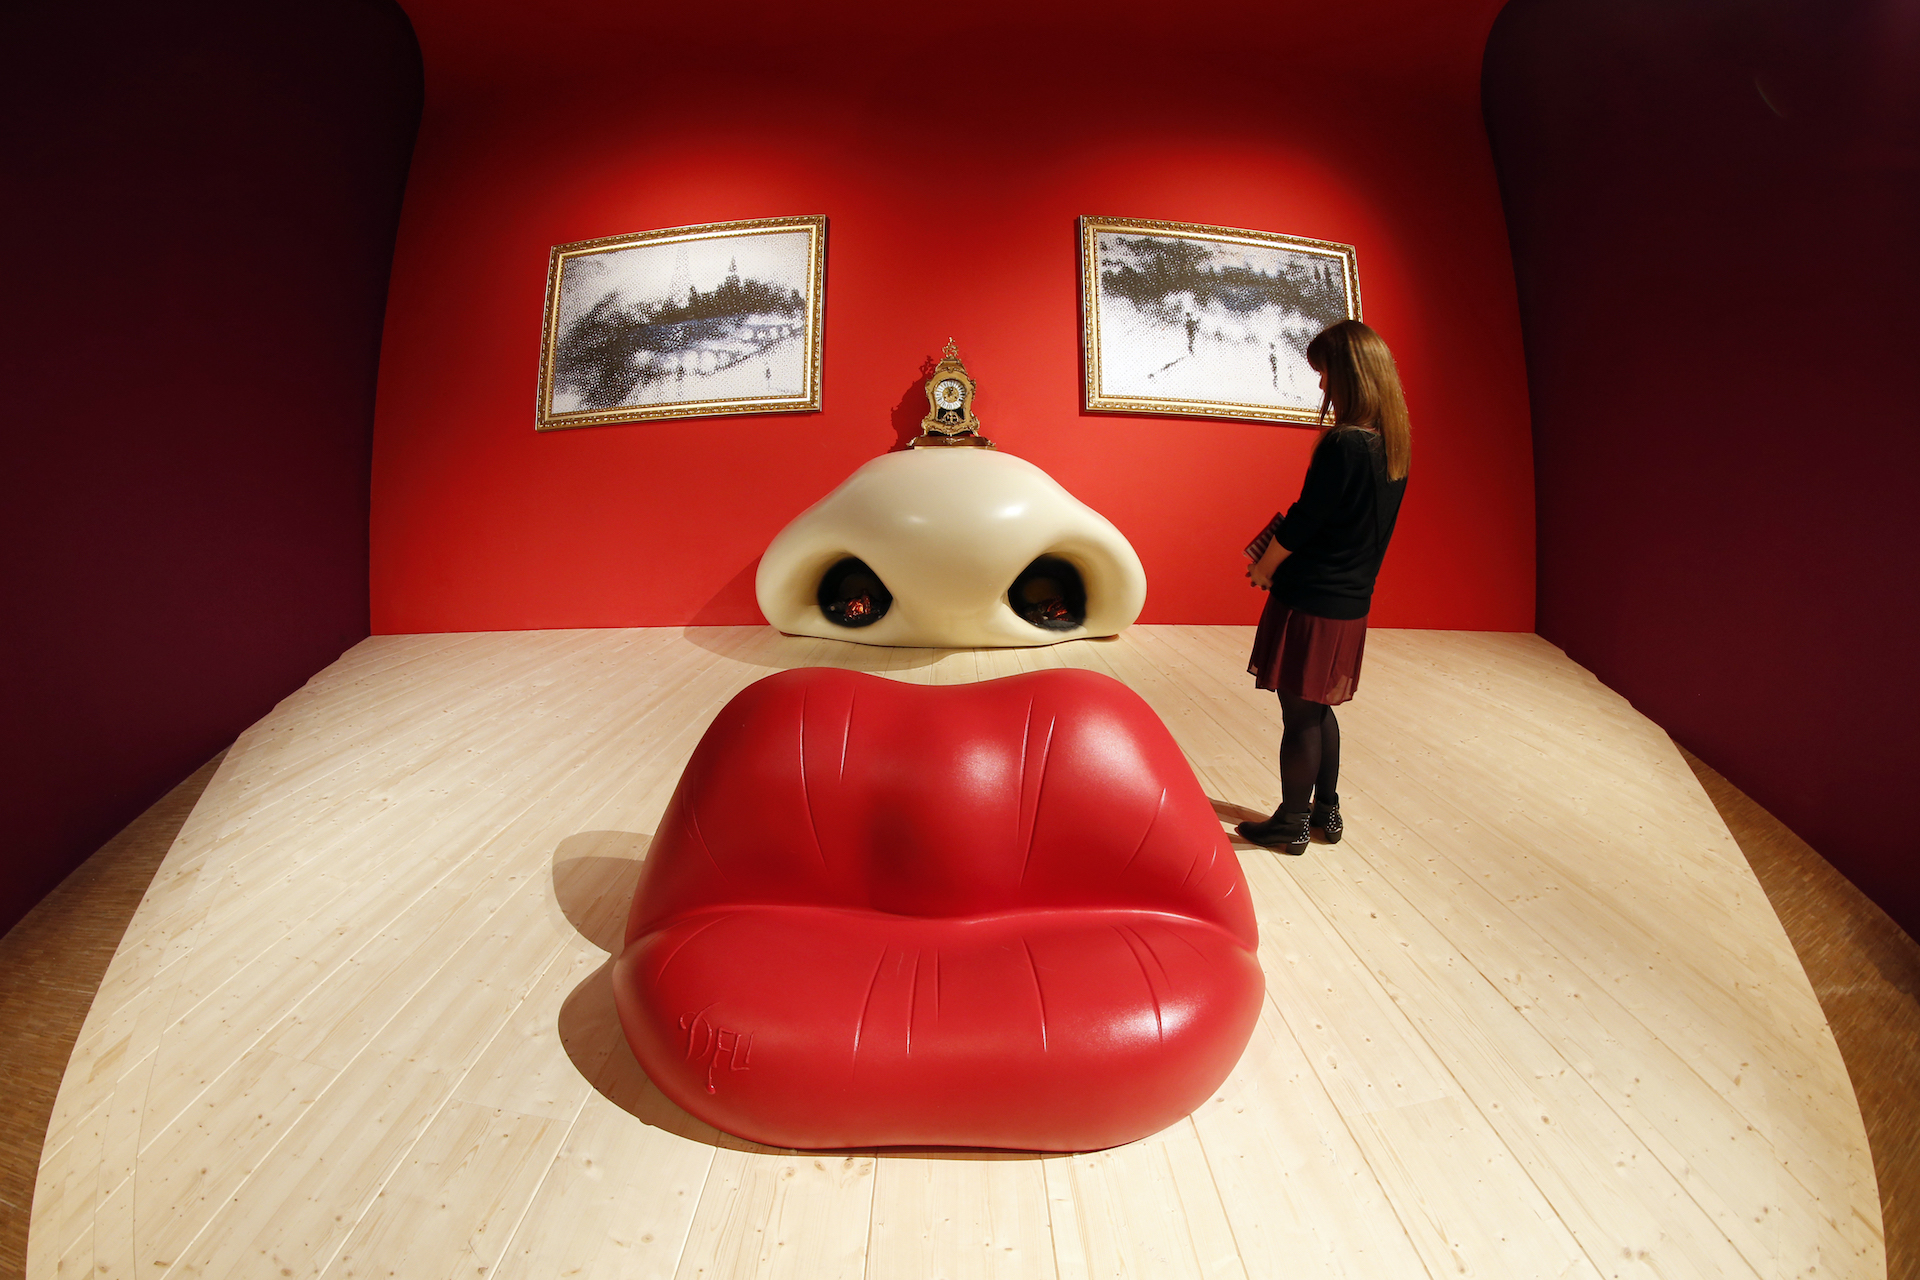 La obra de Dalí en el Pompidou en Noviembre de 2012. (Foto: Benoit Tessier)